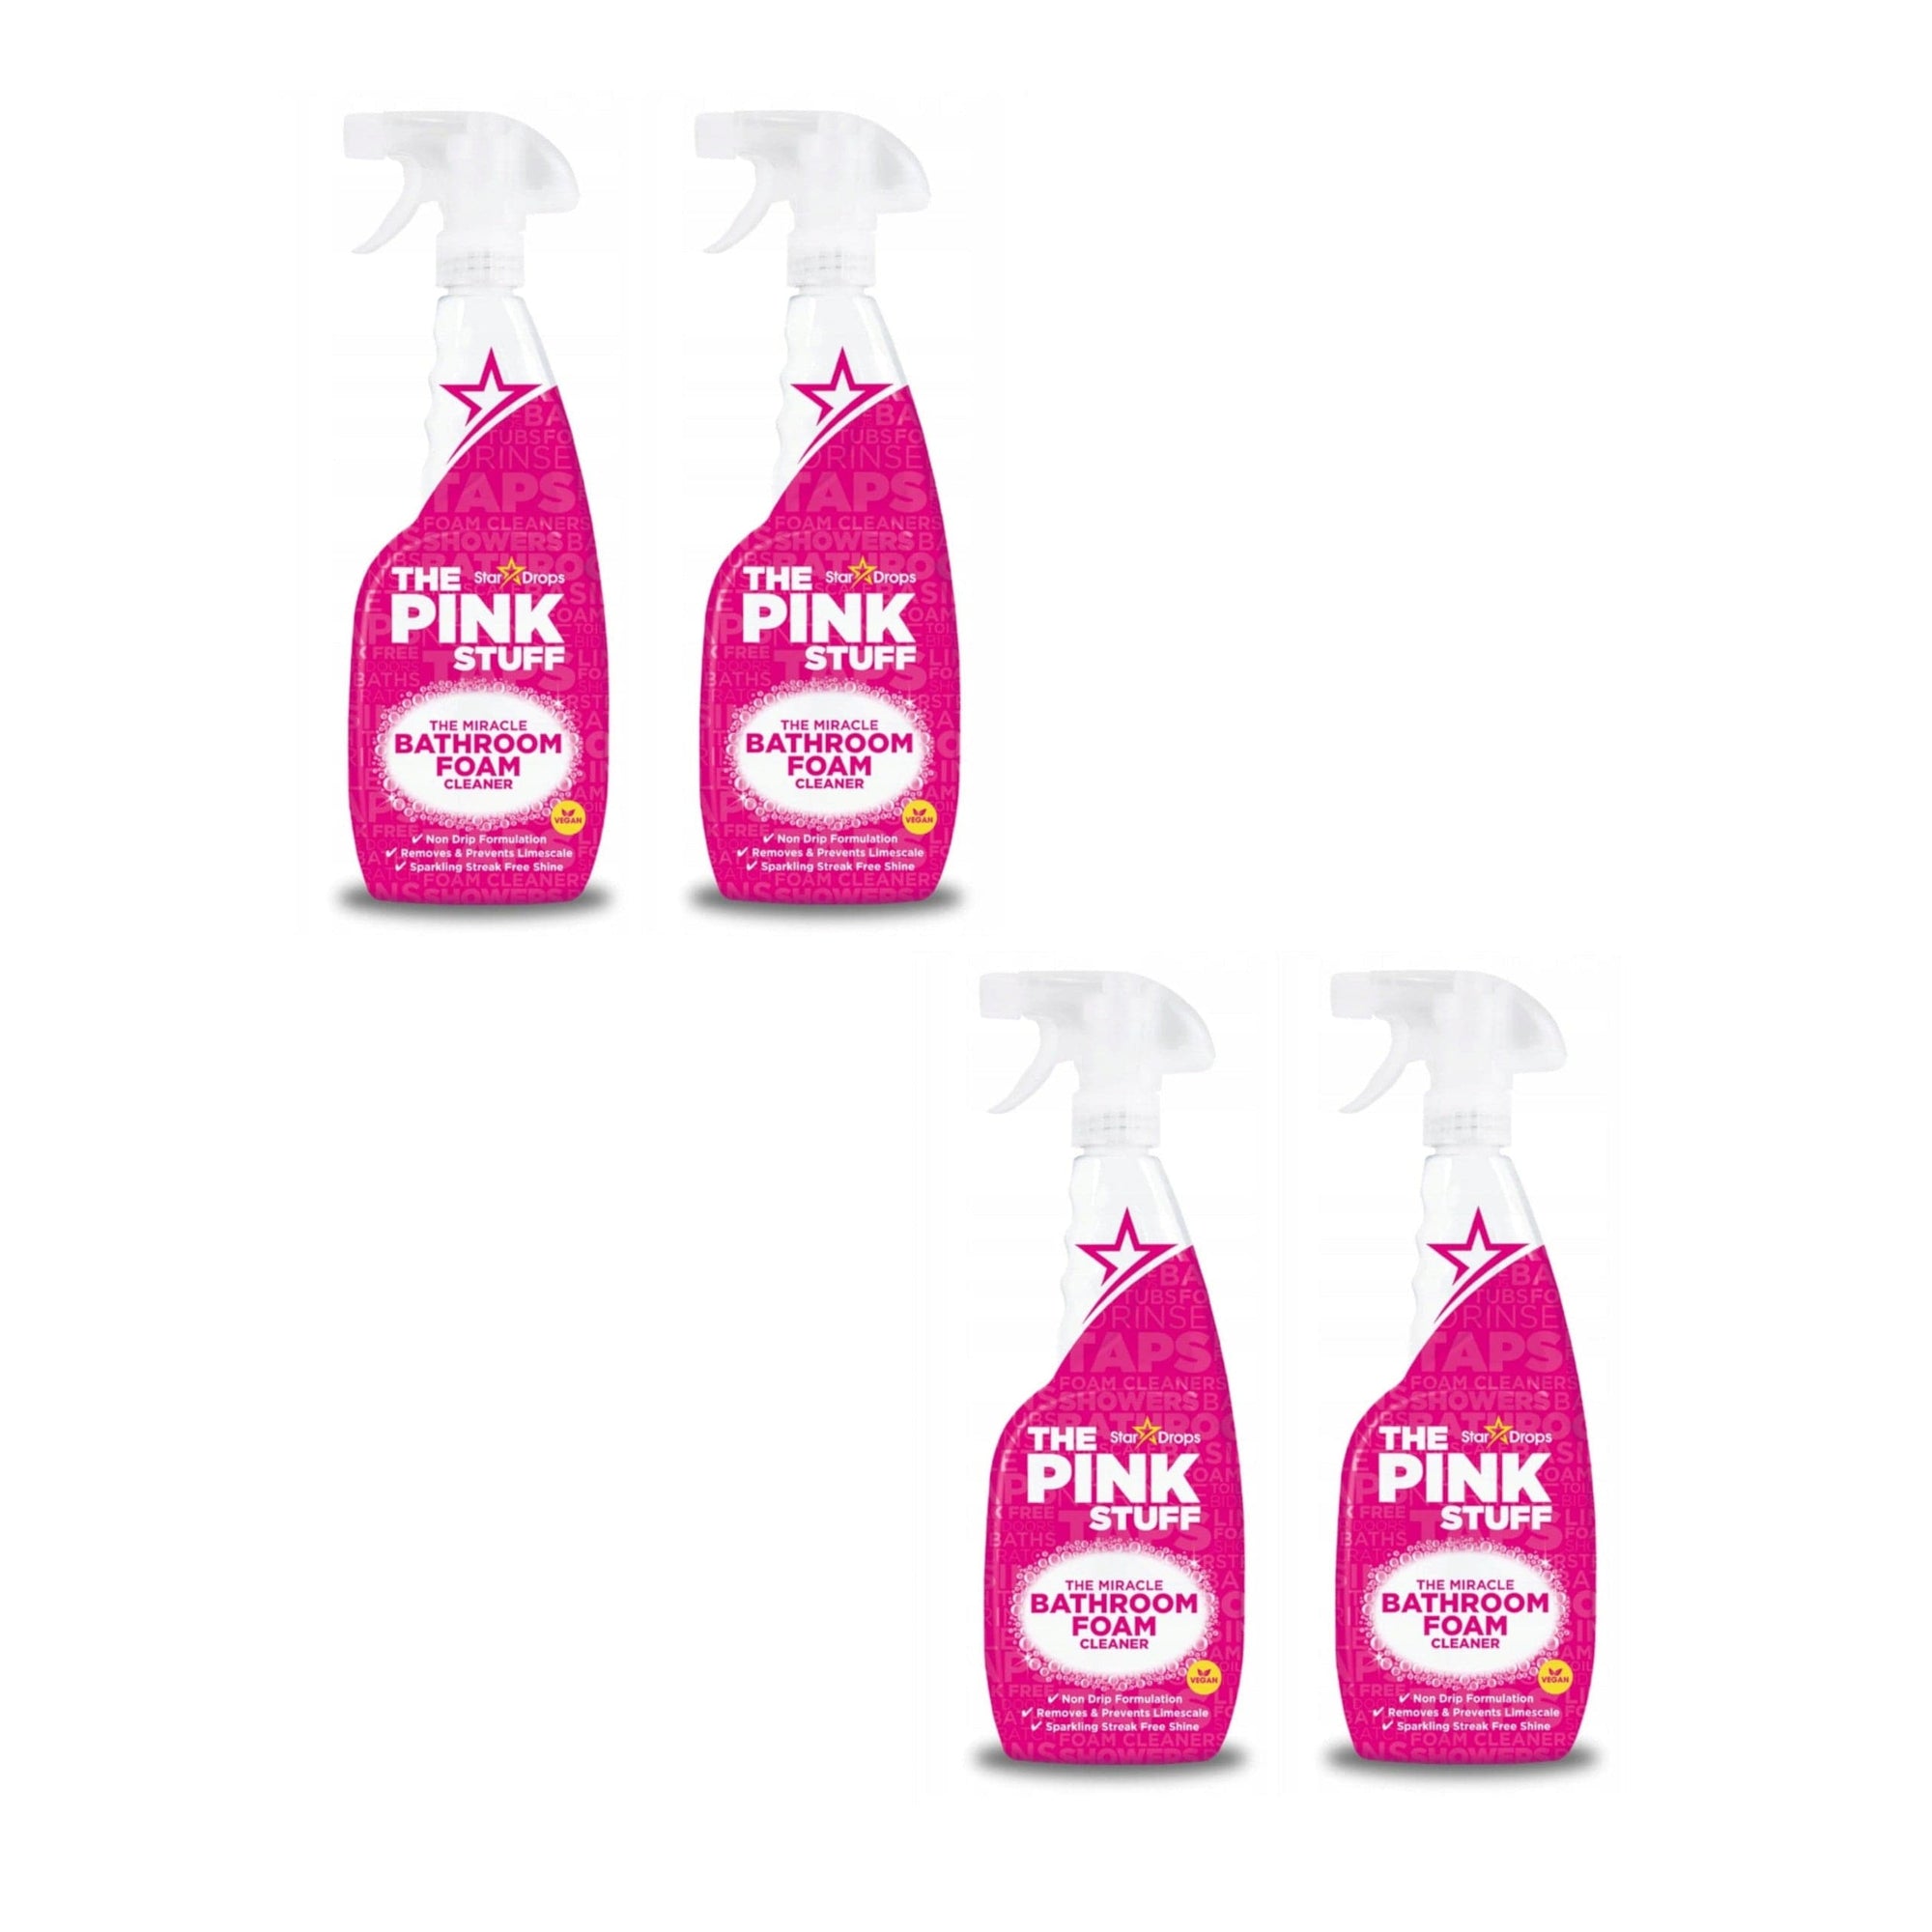 Produkt THE PINK STUFF Środki do łazienki 4x Środek czyszczący do łazienki THE PINK STUFF Bathroom Foam Cleaner 750 ml K_027826_4